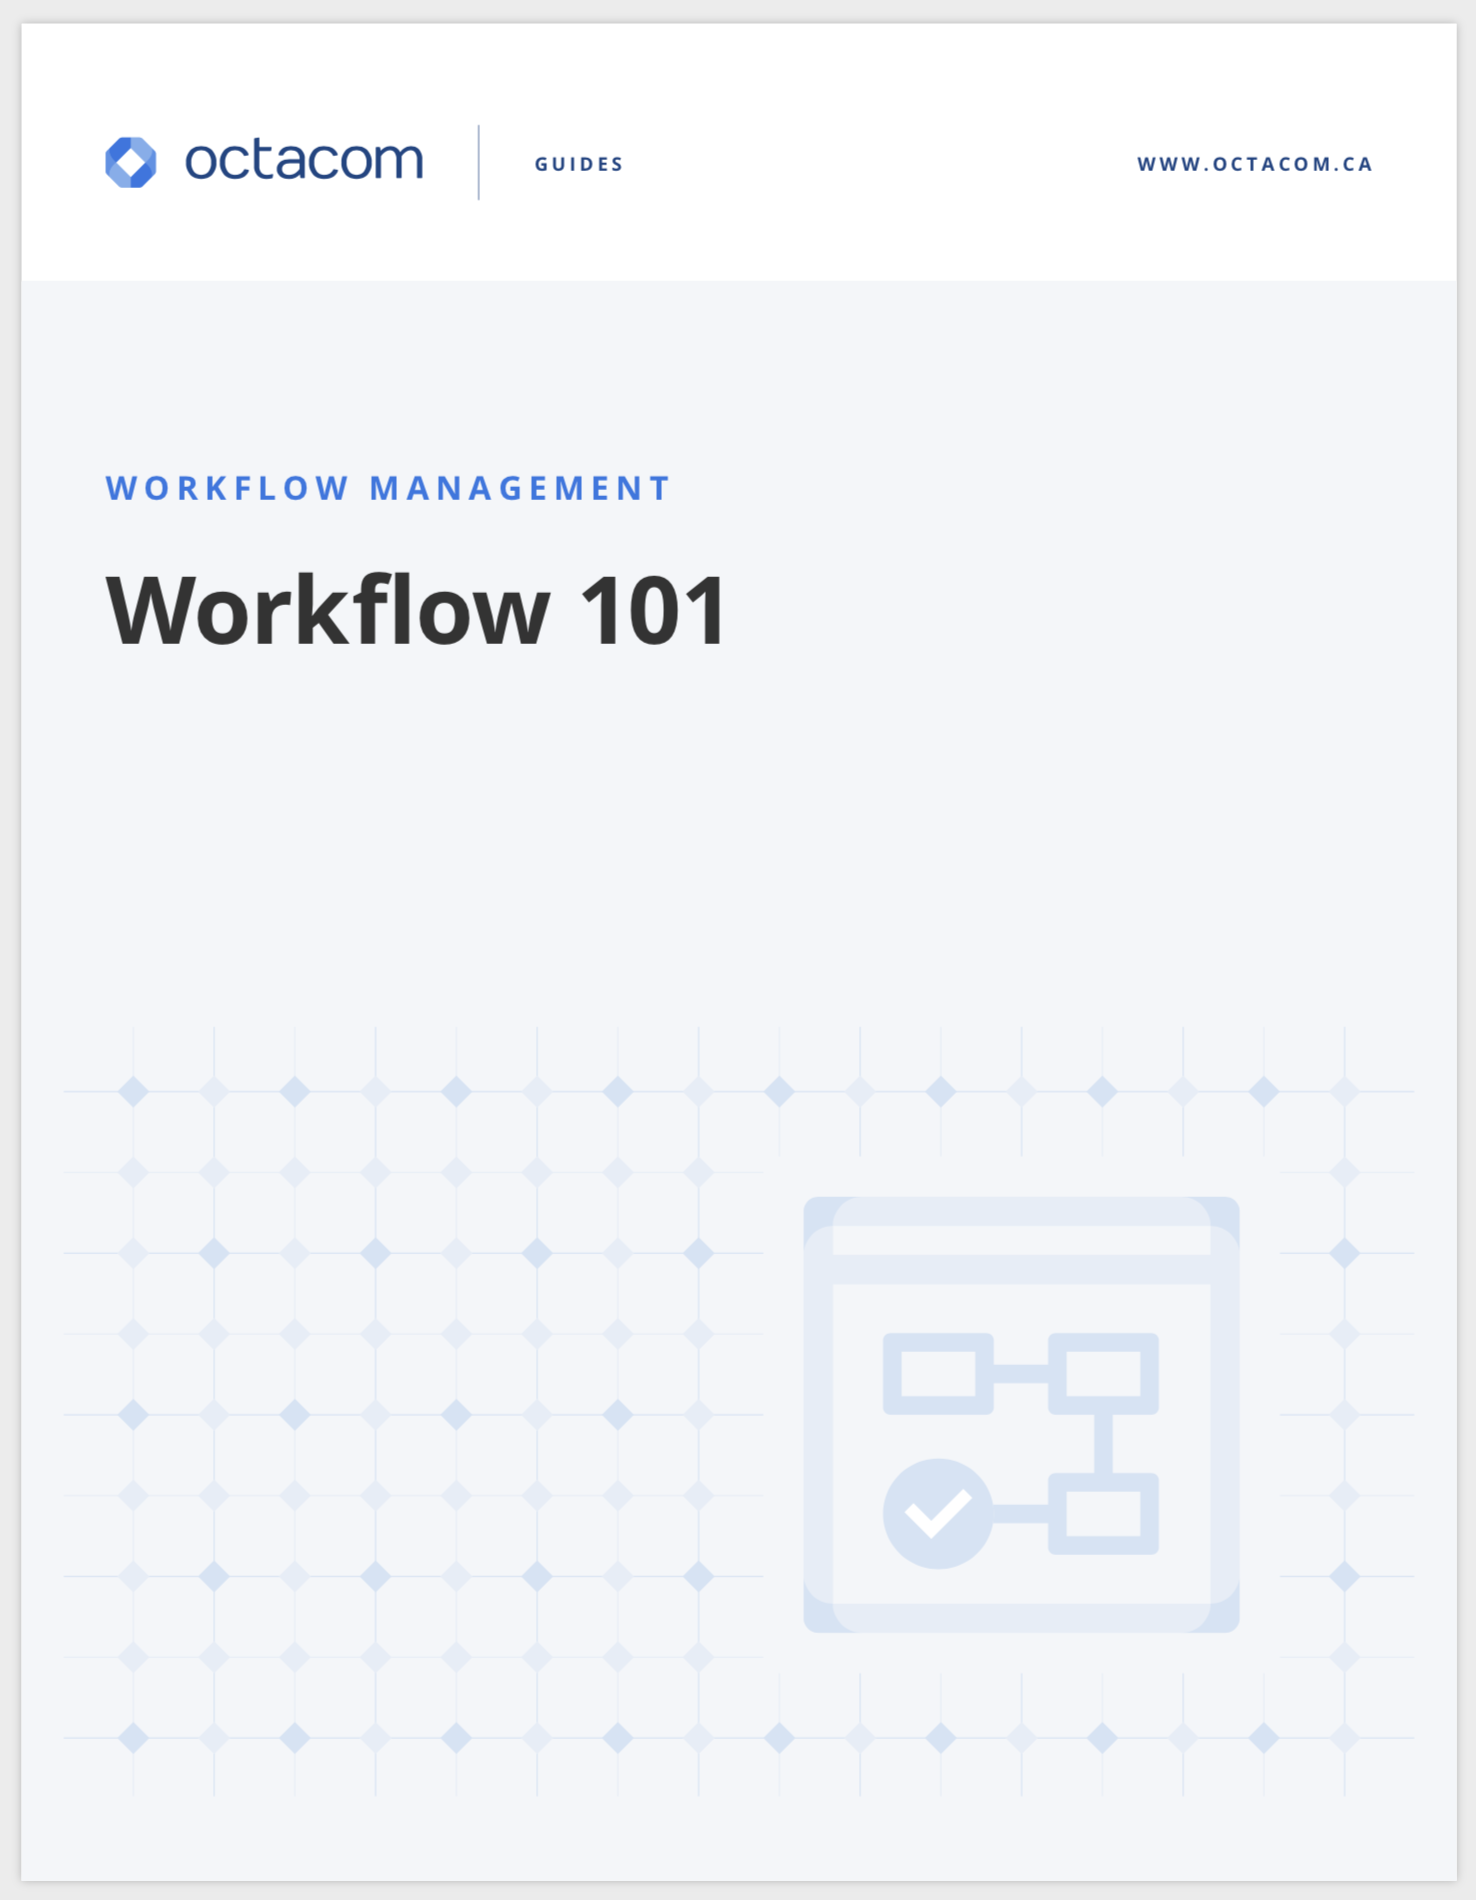 Workflow 101 booklet